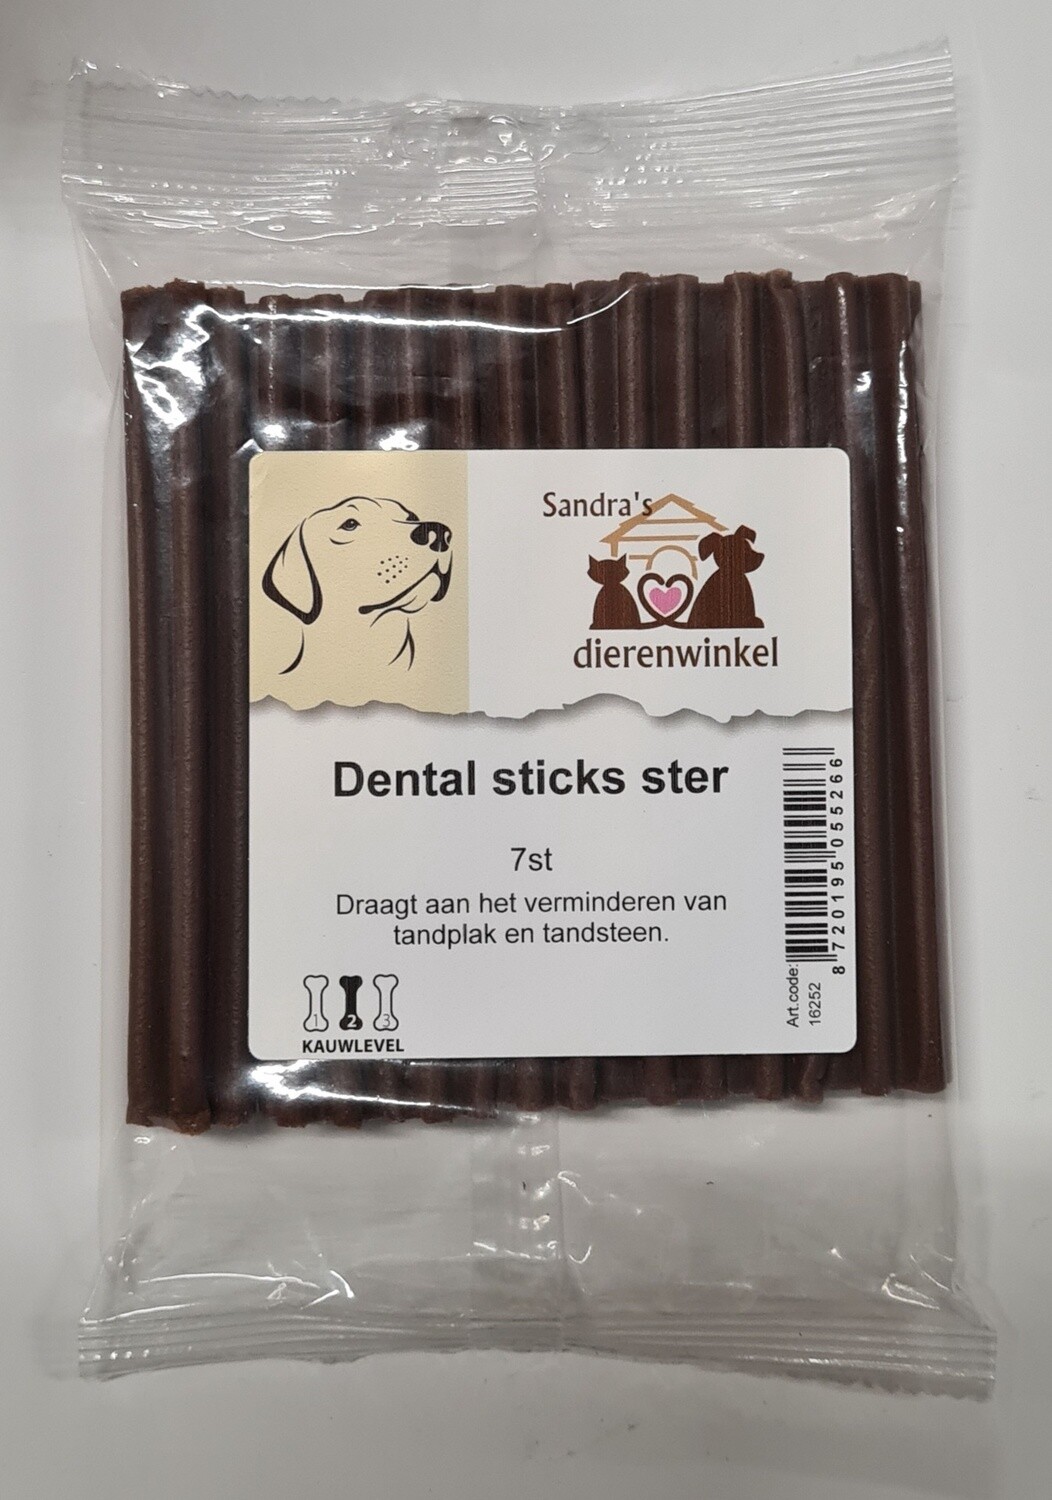 Dental sticks ster